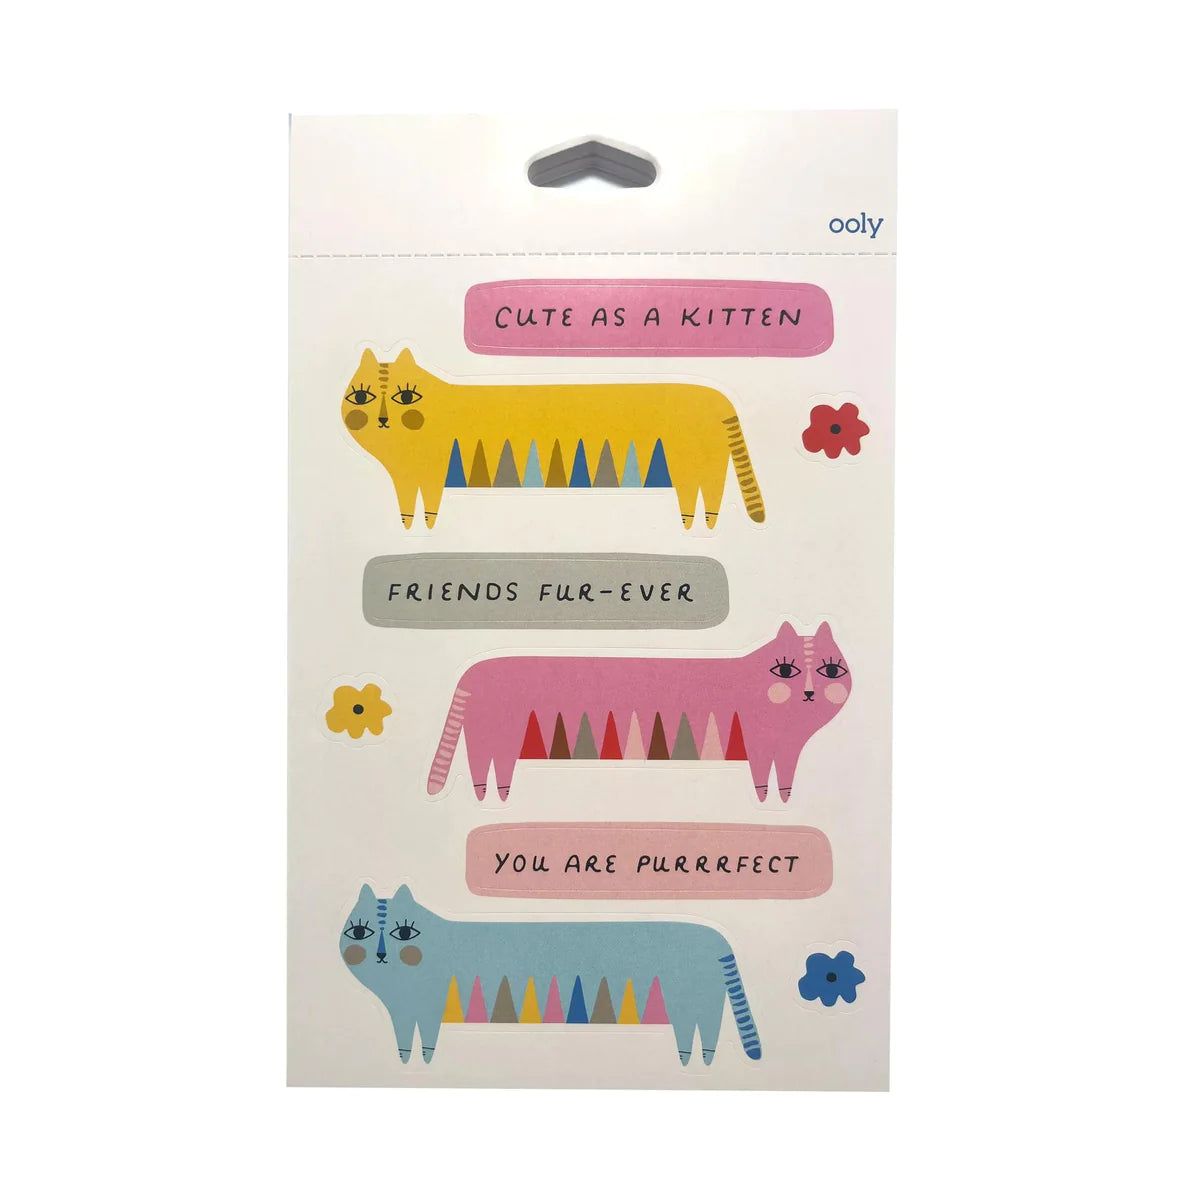 Stickiville x Suzy Ultman: A Whole Lotta Stickers! Sticker Book - Dress Up Cats